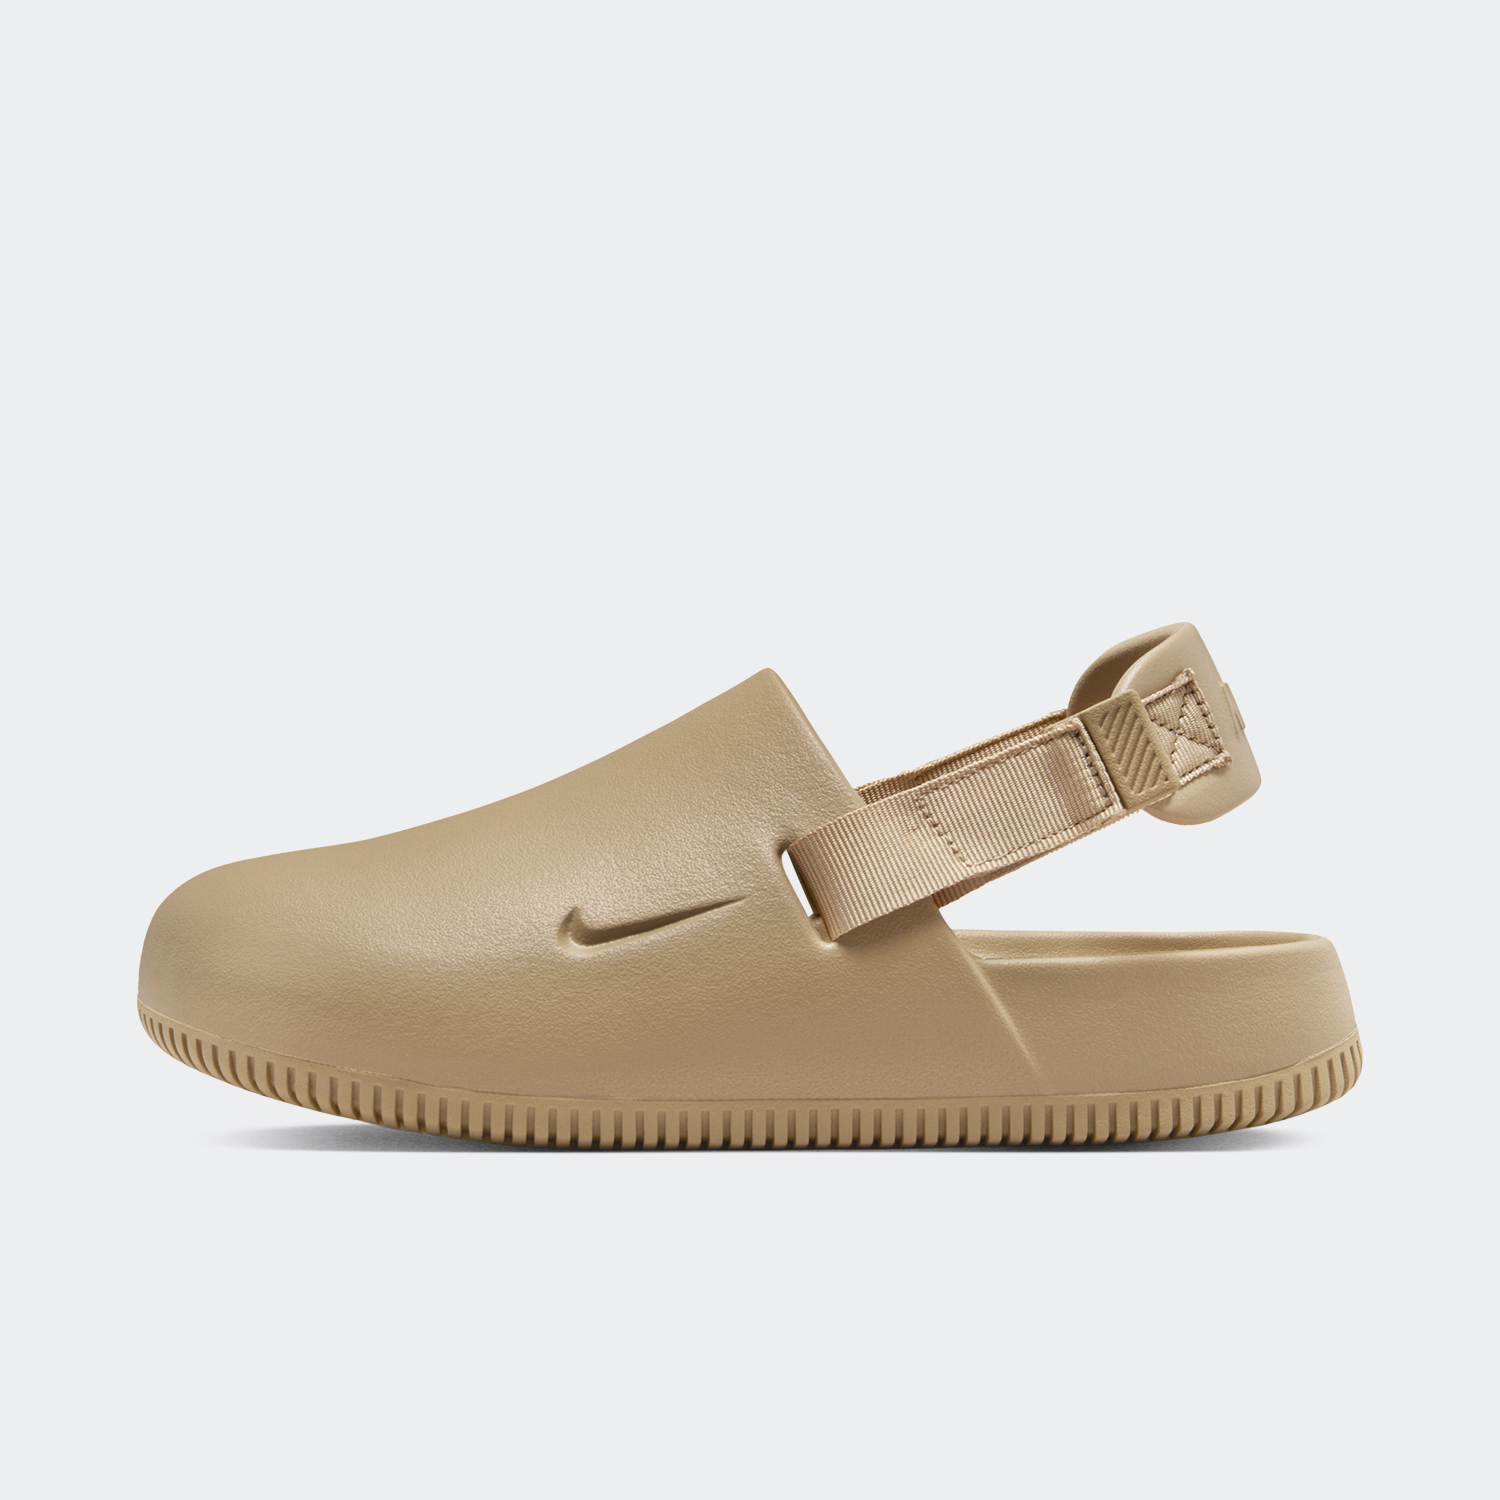 Nike Calm Slipper Mule / Clog – Olive | sneakerb0b RELEASES